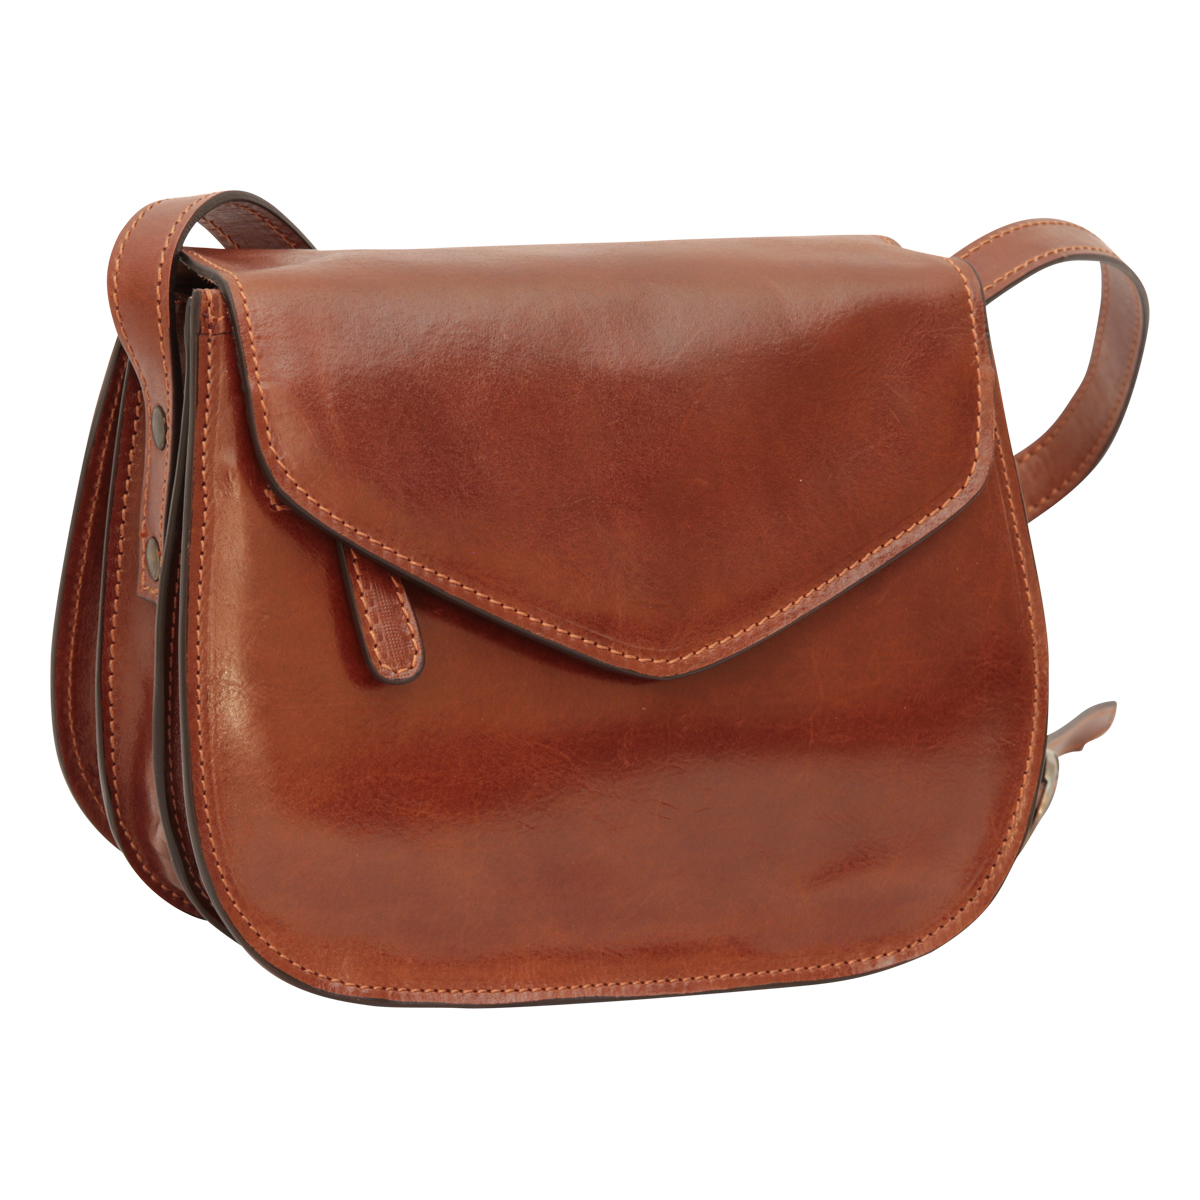 Full grain calfskin shoulder bag - brown | 209605MA US | Old Angler Firenze